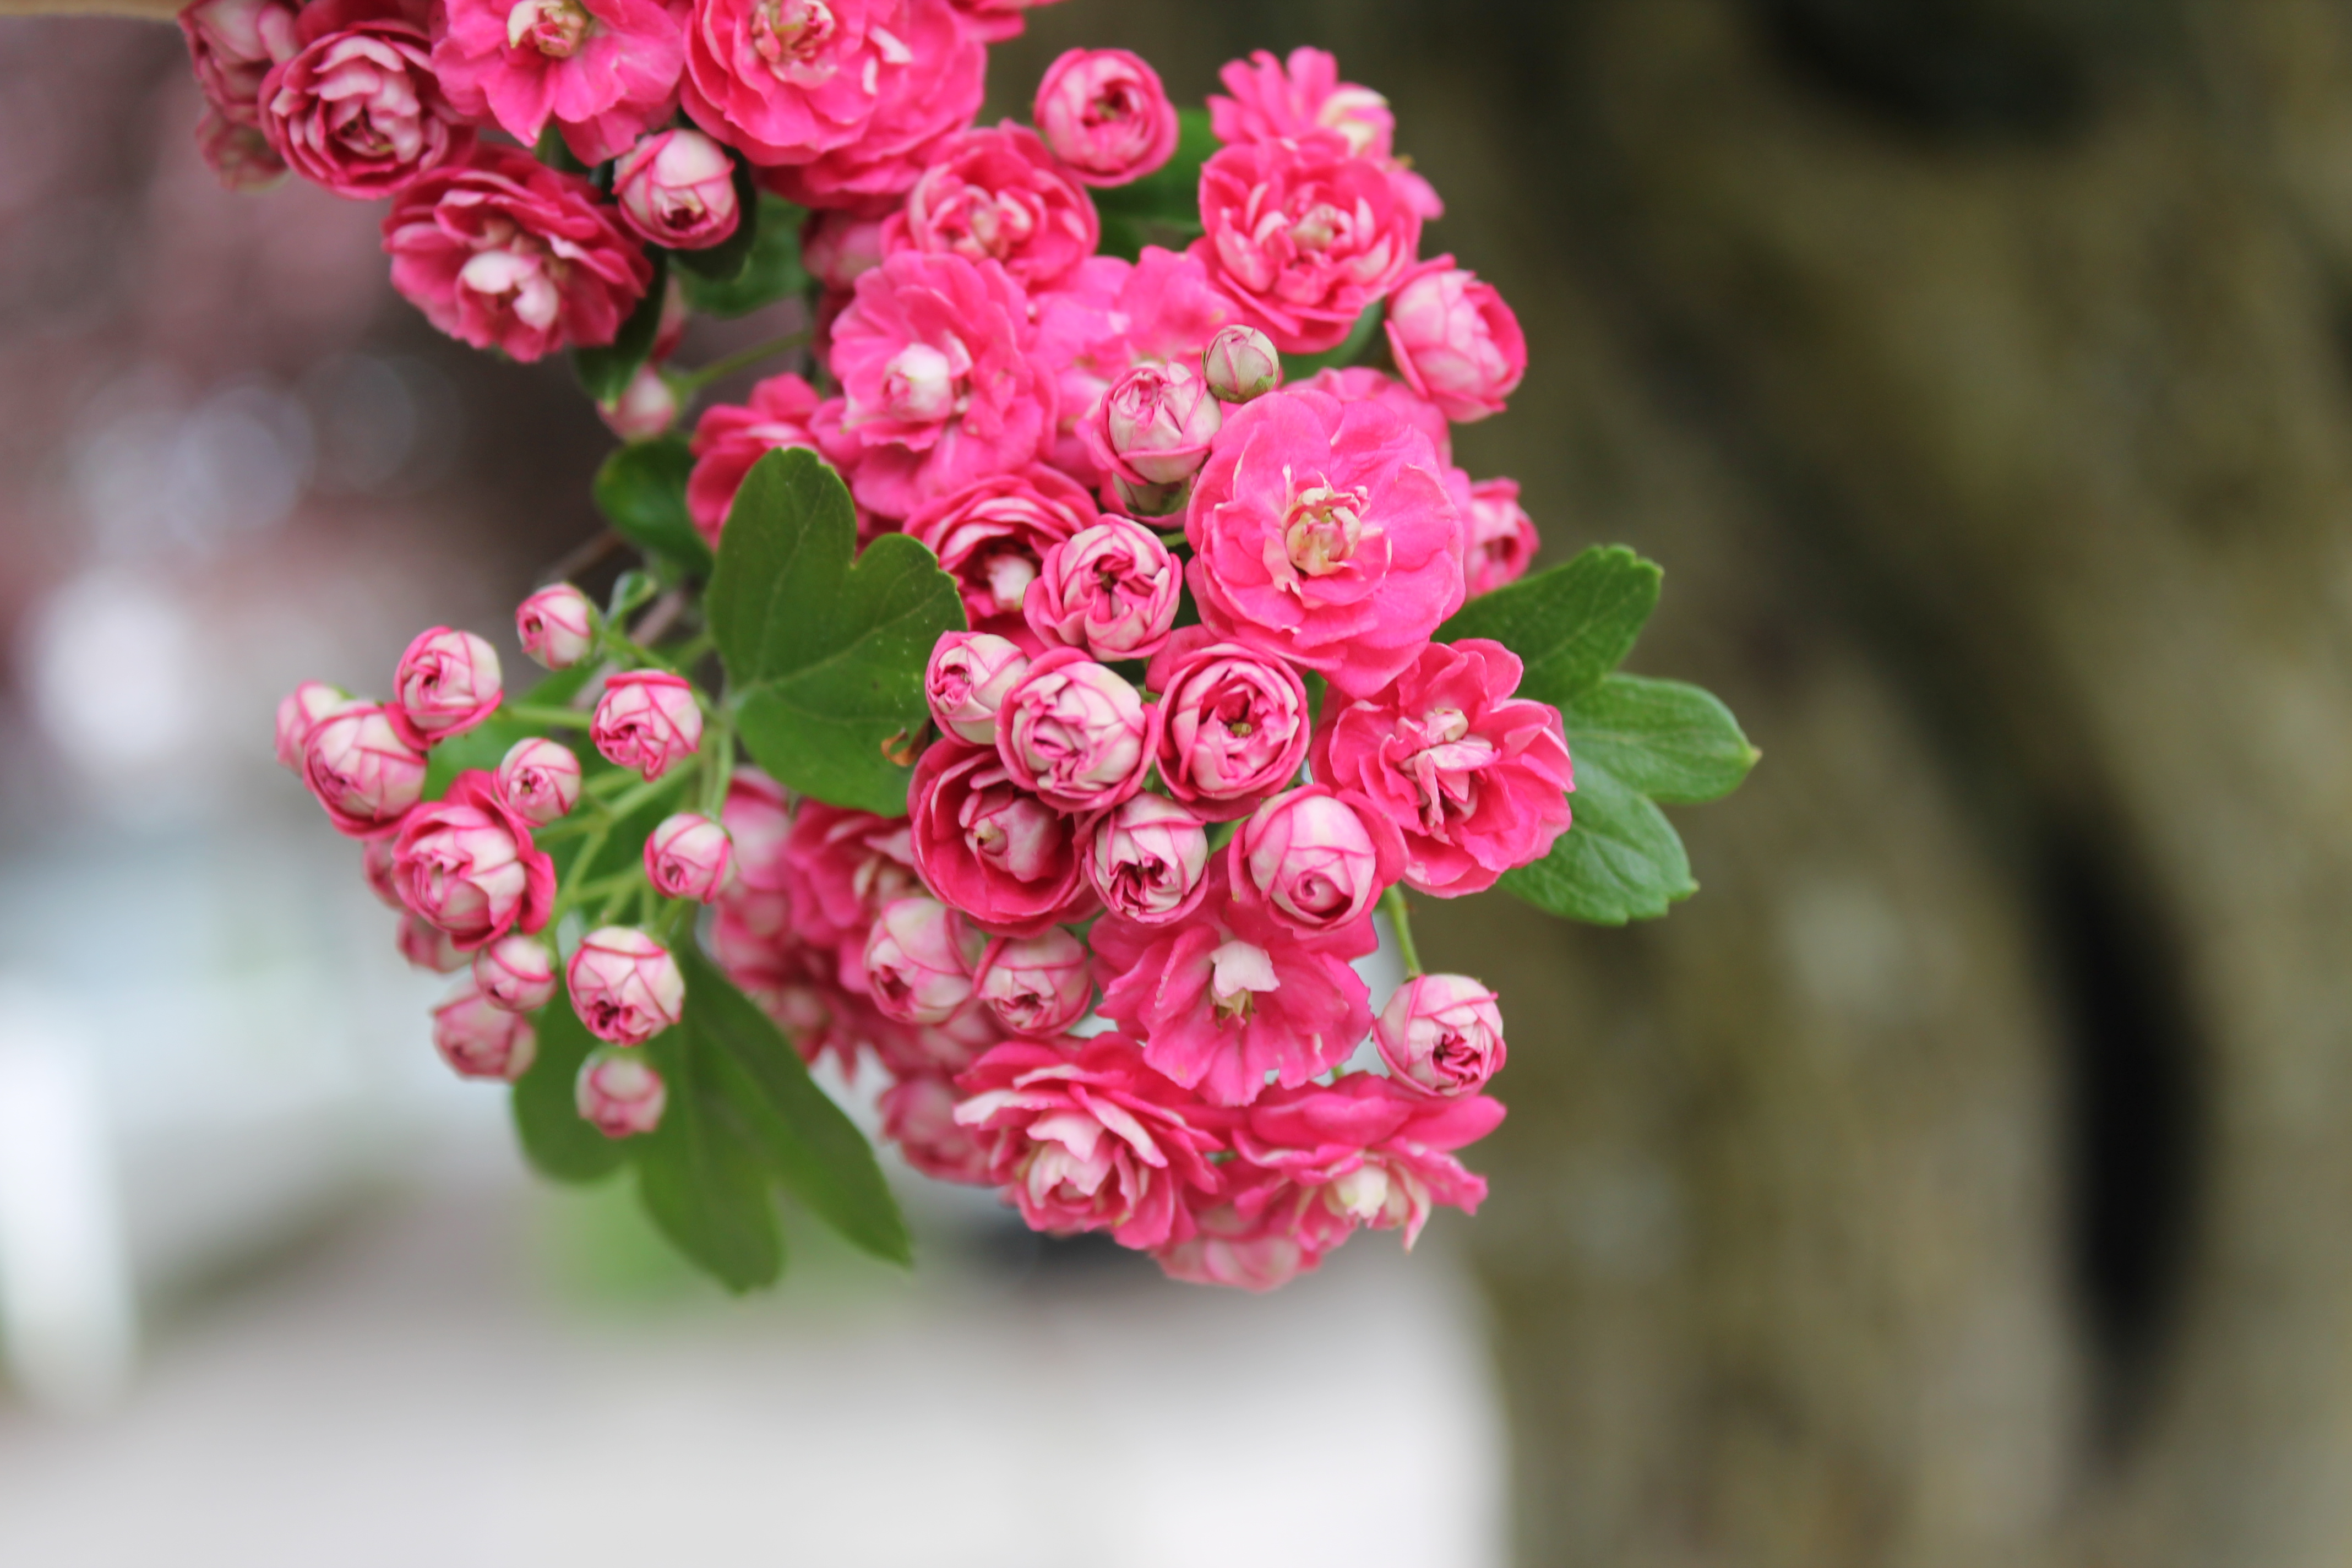 Little Pink Flowers Images - Flower Decoration Ideas